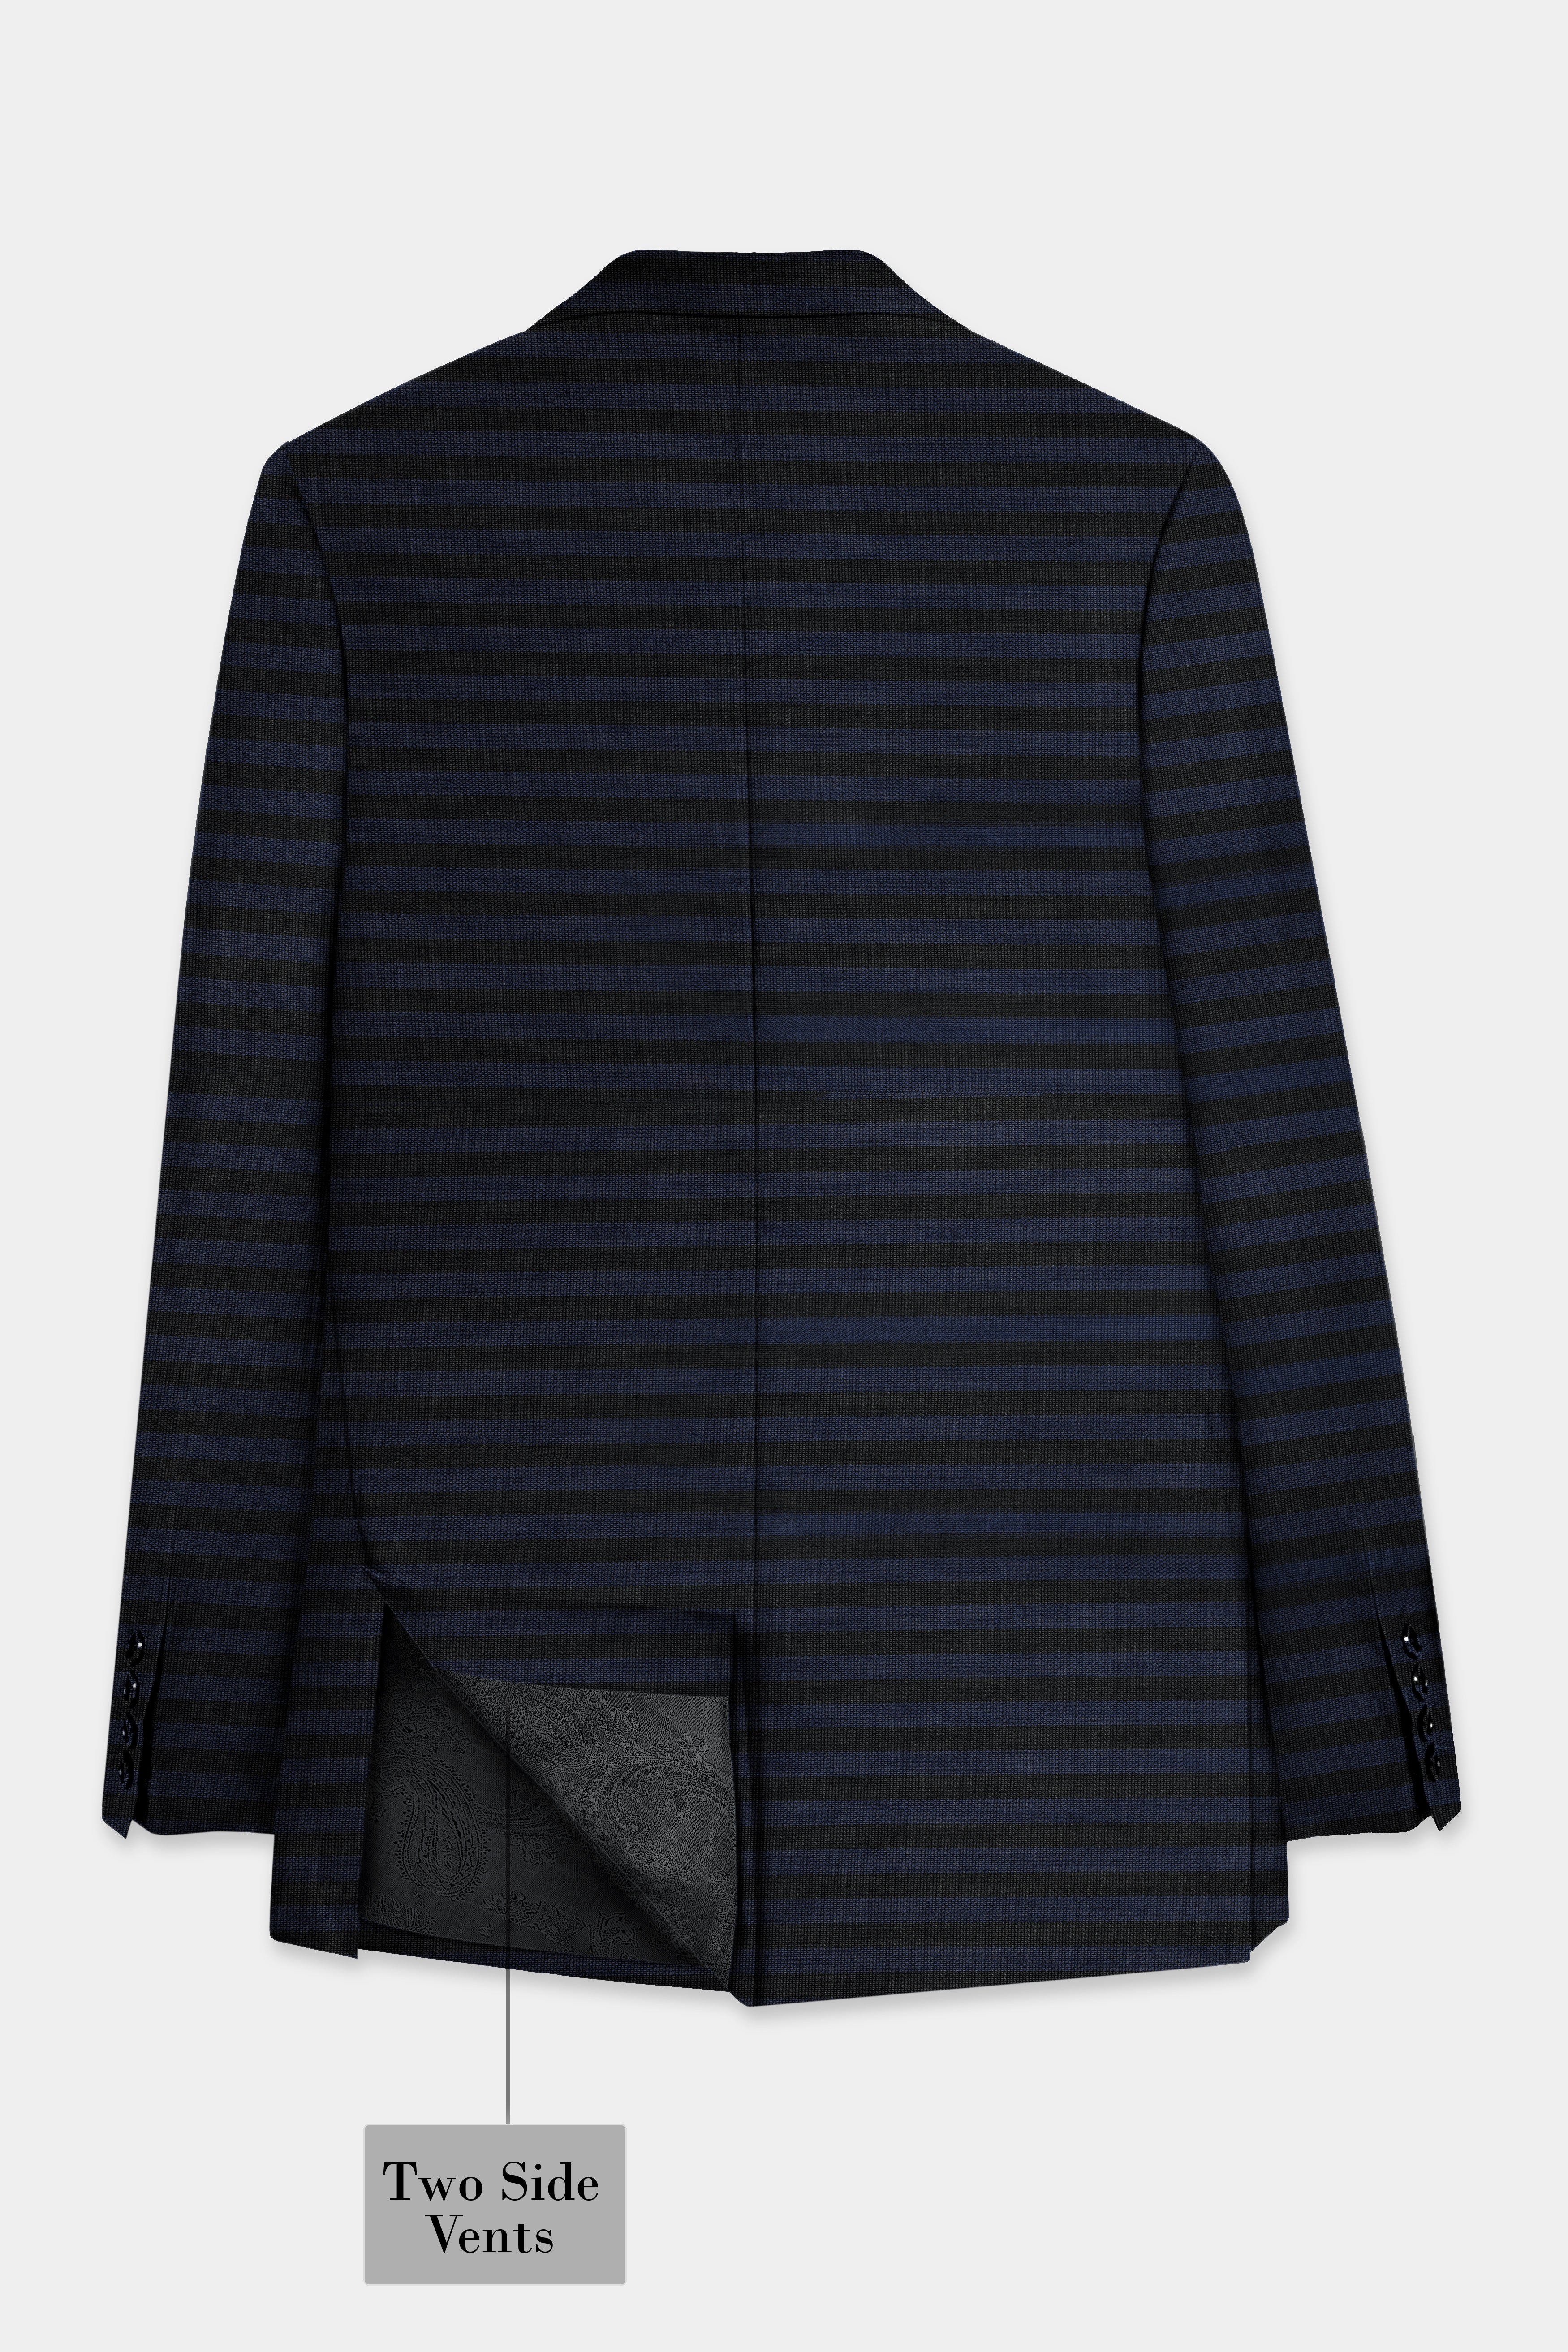 Mirage Blue and Black Striped Wool Blend Blazer